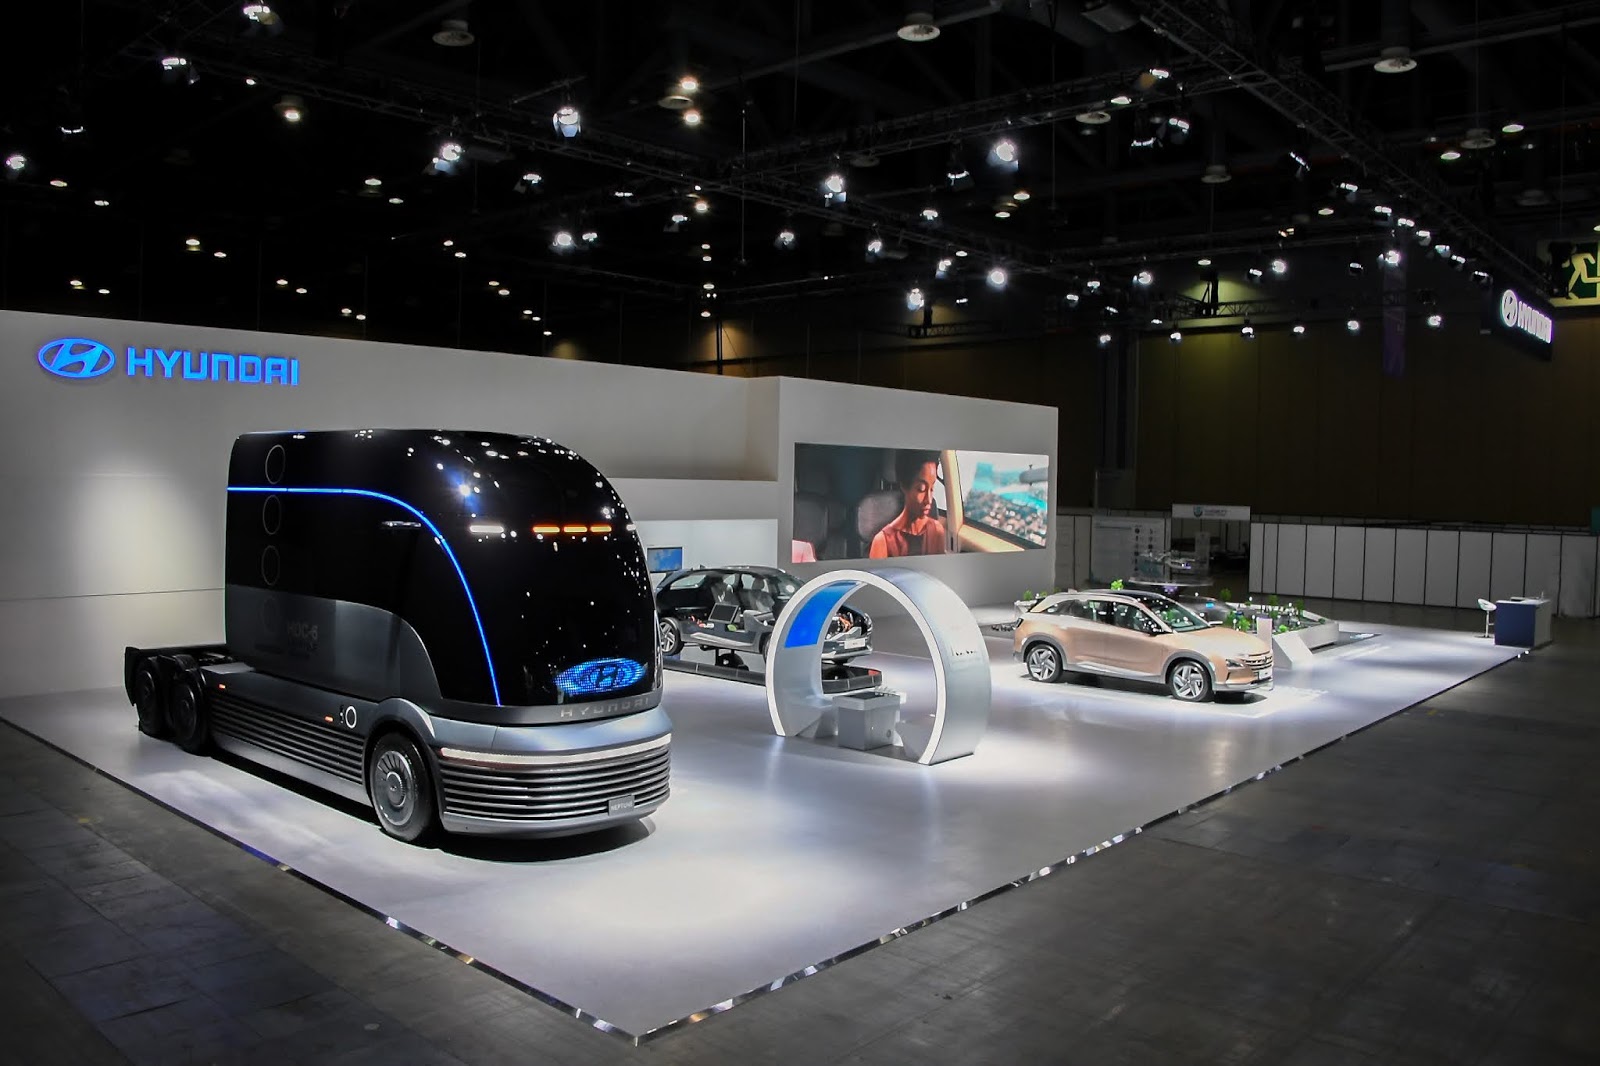 2528Photo2B425292BHMC2Bat2BH22BMobility2B252B2BEnergy2BShow Η Hyundai, παρουσίασε το μέλλον του υδρογόνου στο H2 Mobility + Energy Show 2020